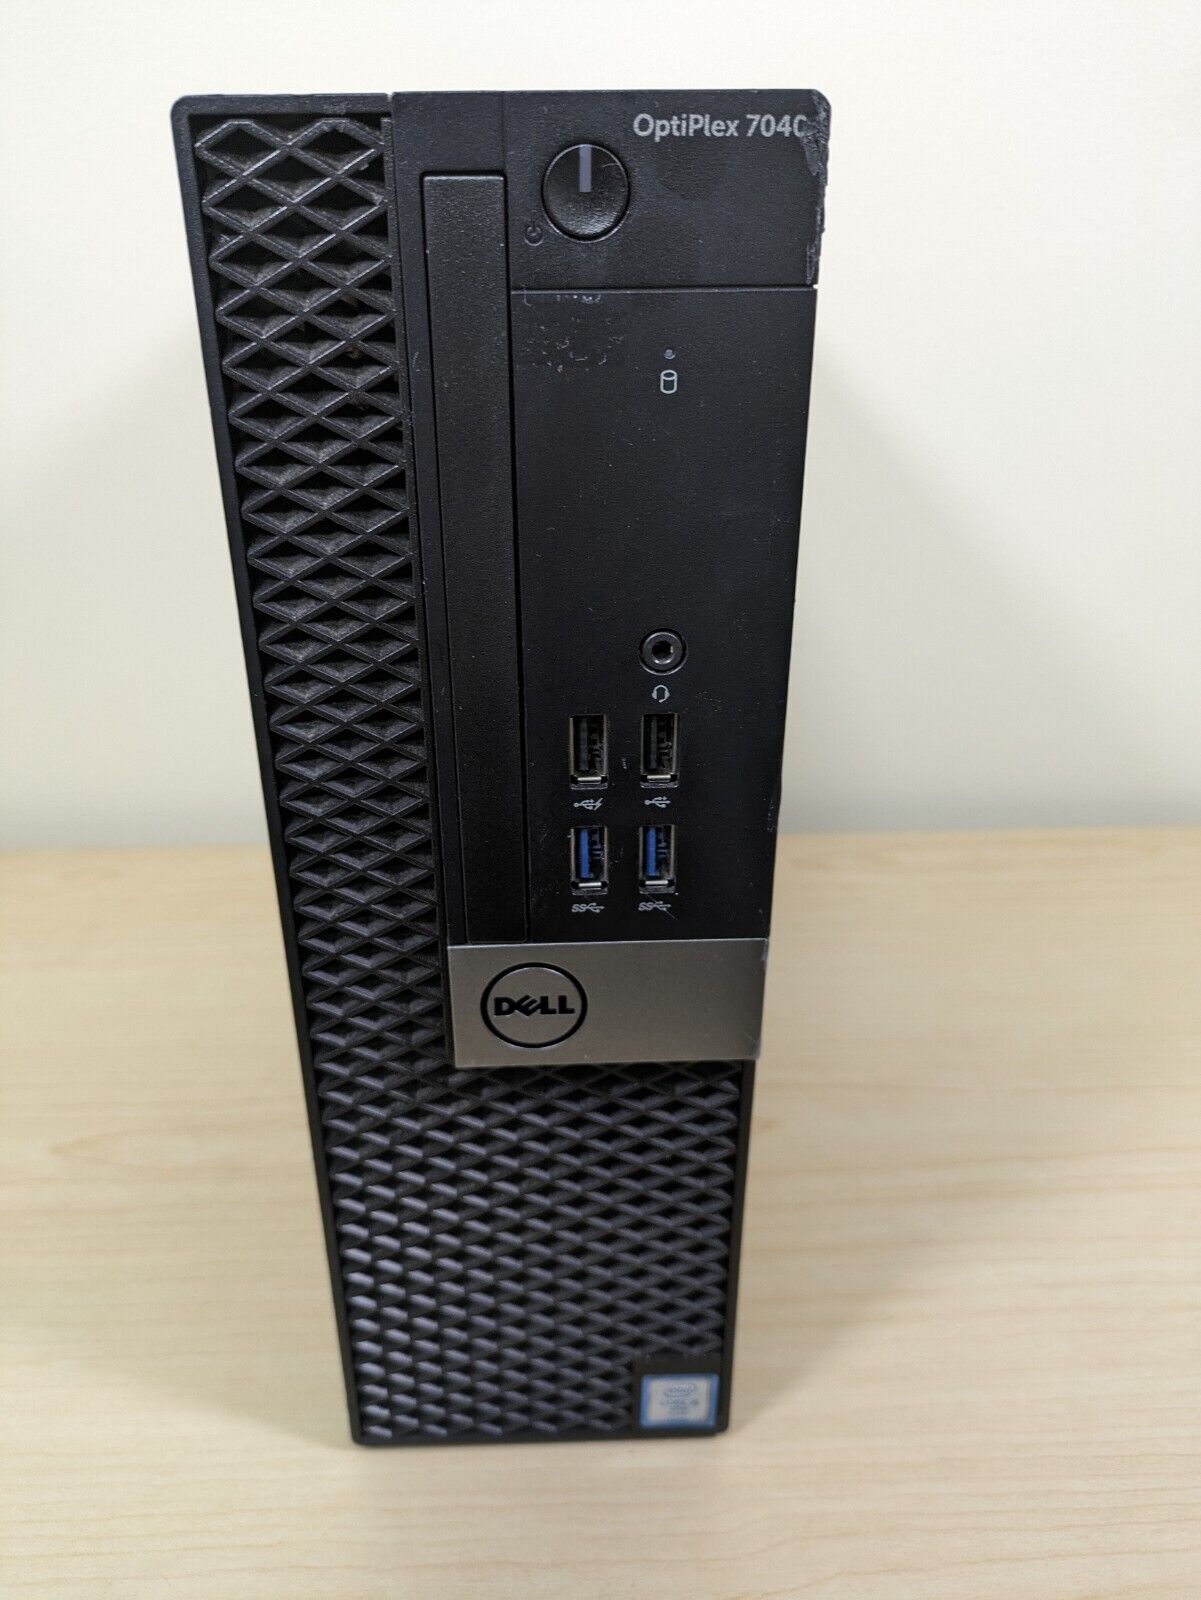 Dell Optiplex 7040 i5-6500 Quad Core 8GB RAM OPNSense 3 Port Firewall / Router 